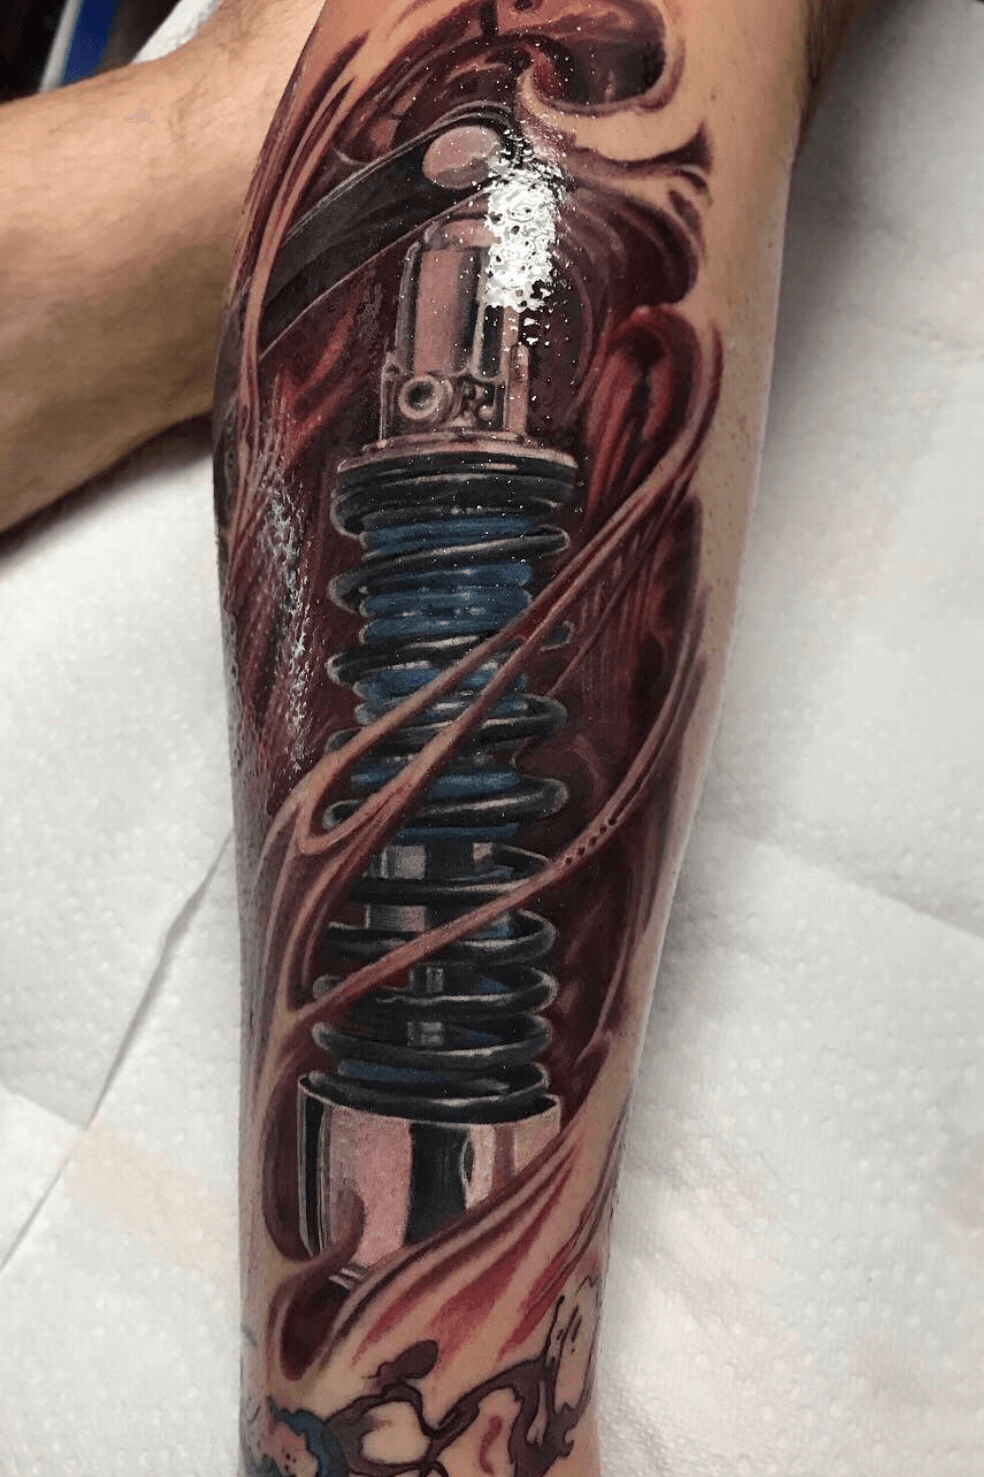 10 Shock tattoo ideas  shock tattoo biomechanical tattoo mechanic tattoo